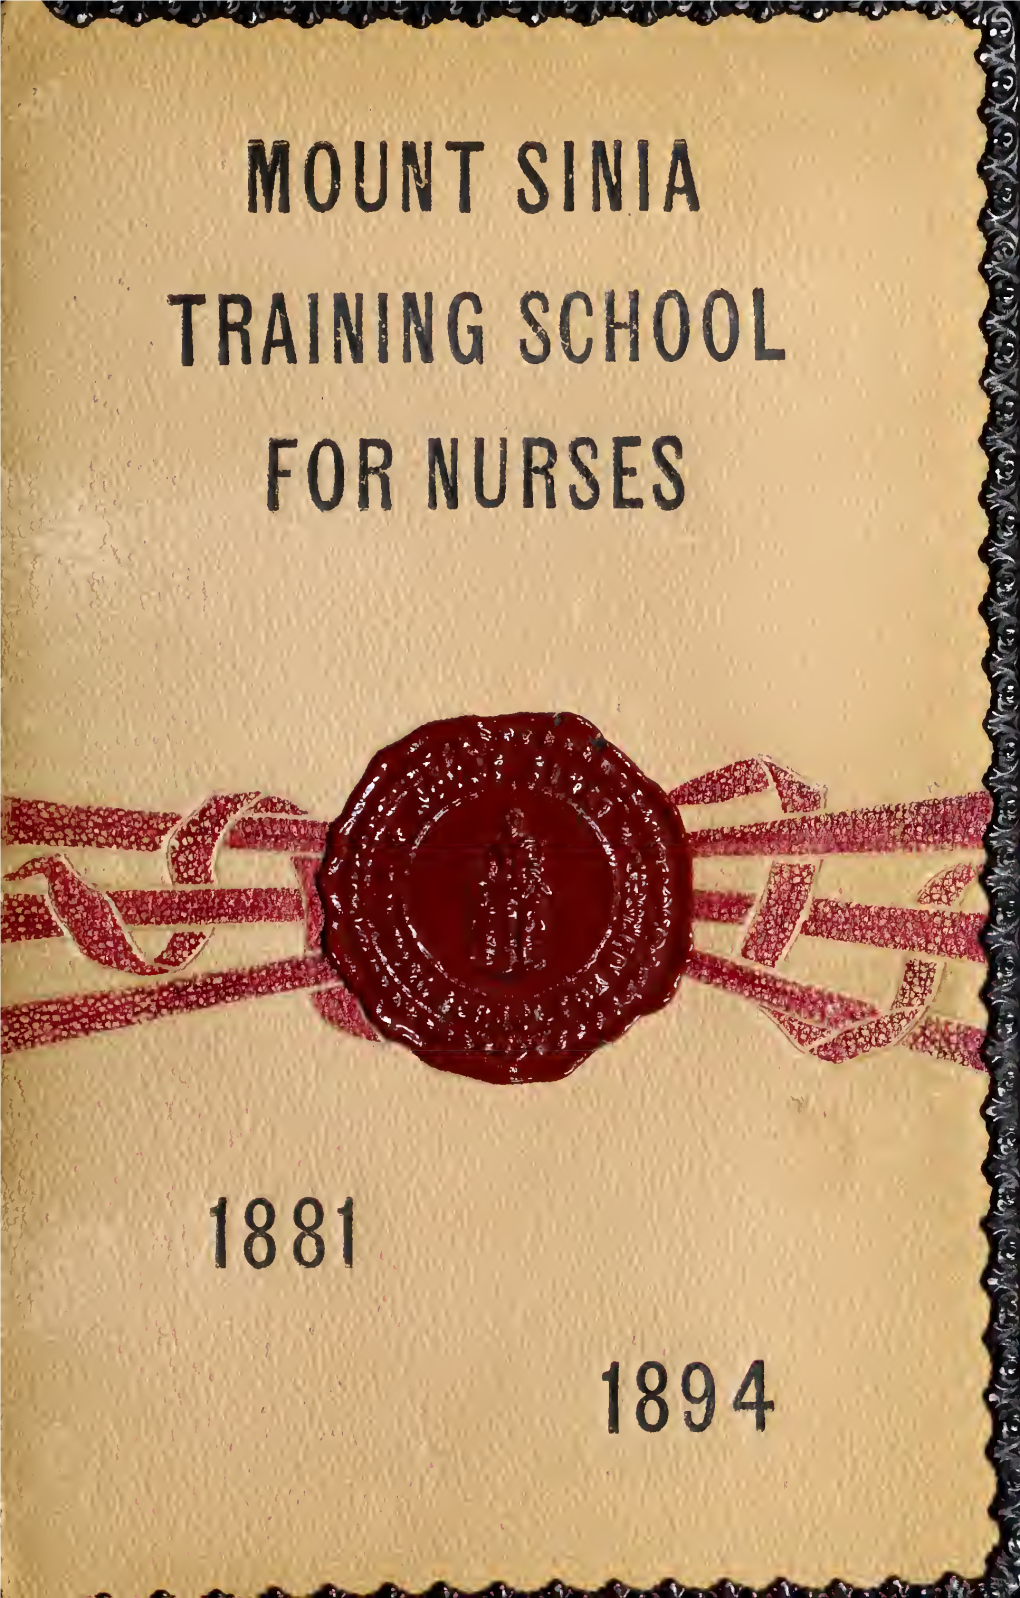 Report of the Mount Sinai Training School for Nurses